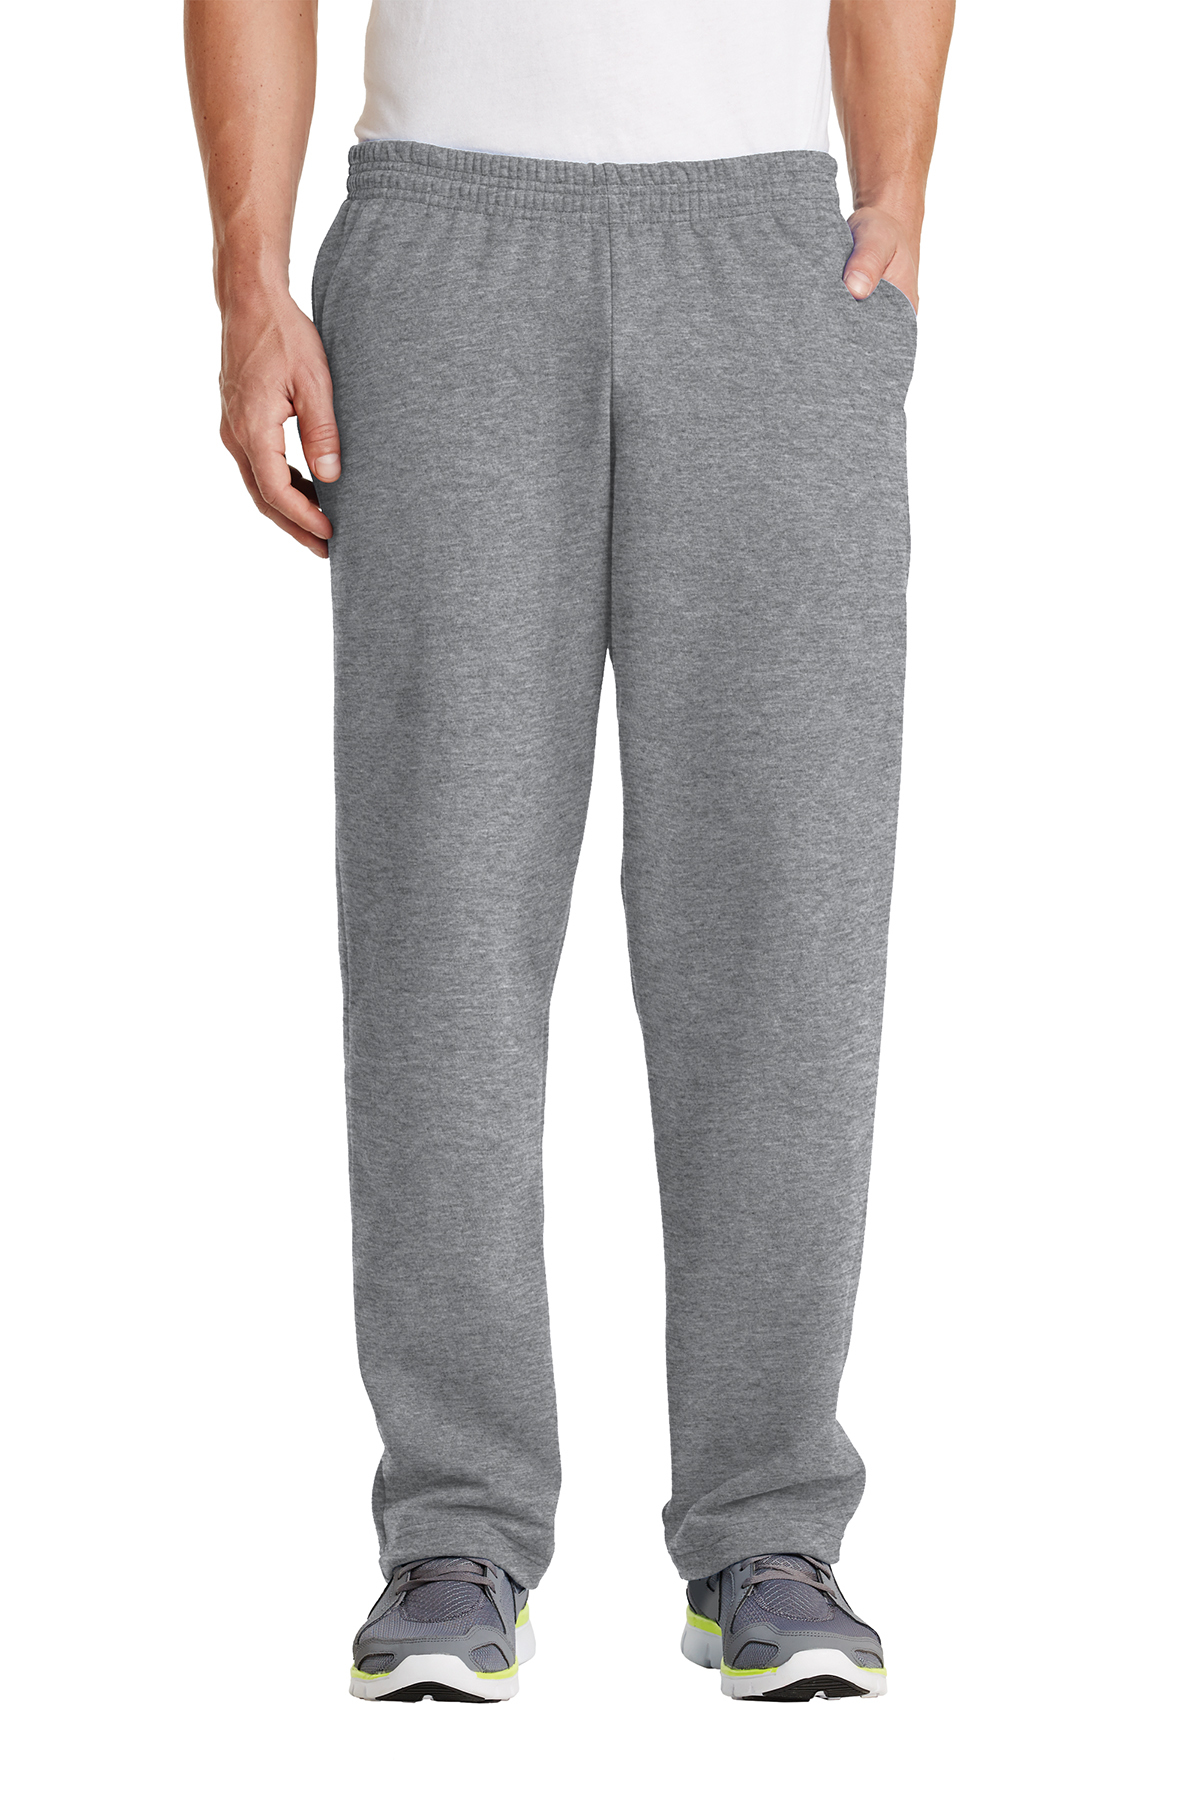 Port & Company Core Fleece Sweatpant with Pockets | Product | Company ...